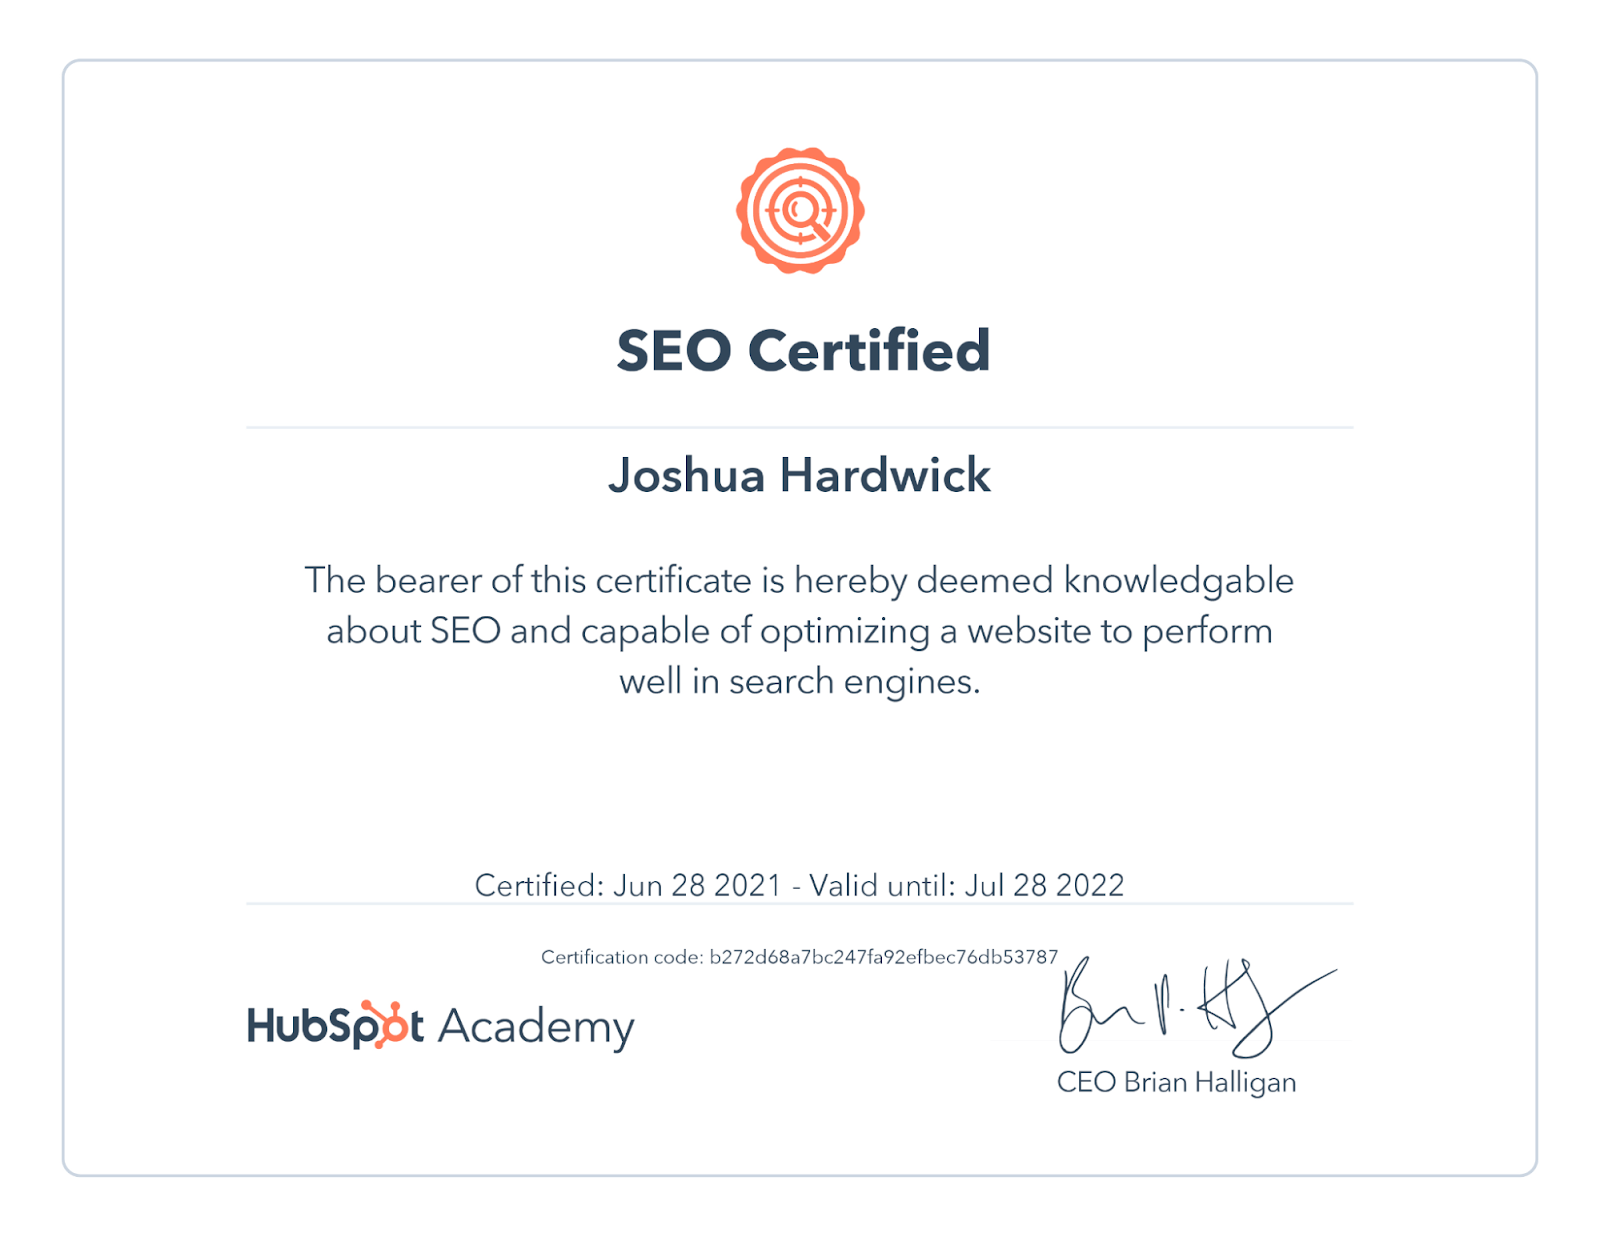 SEO certification from HubSpot
